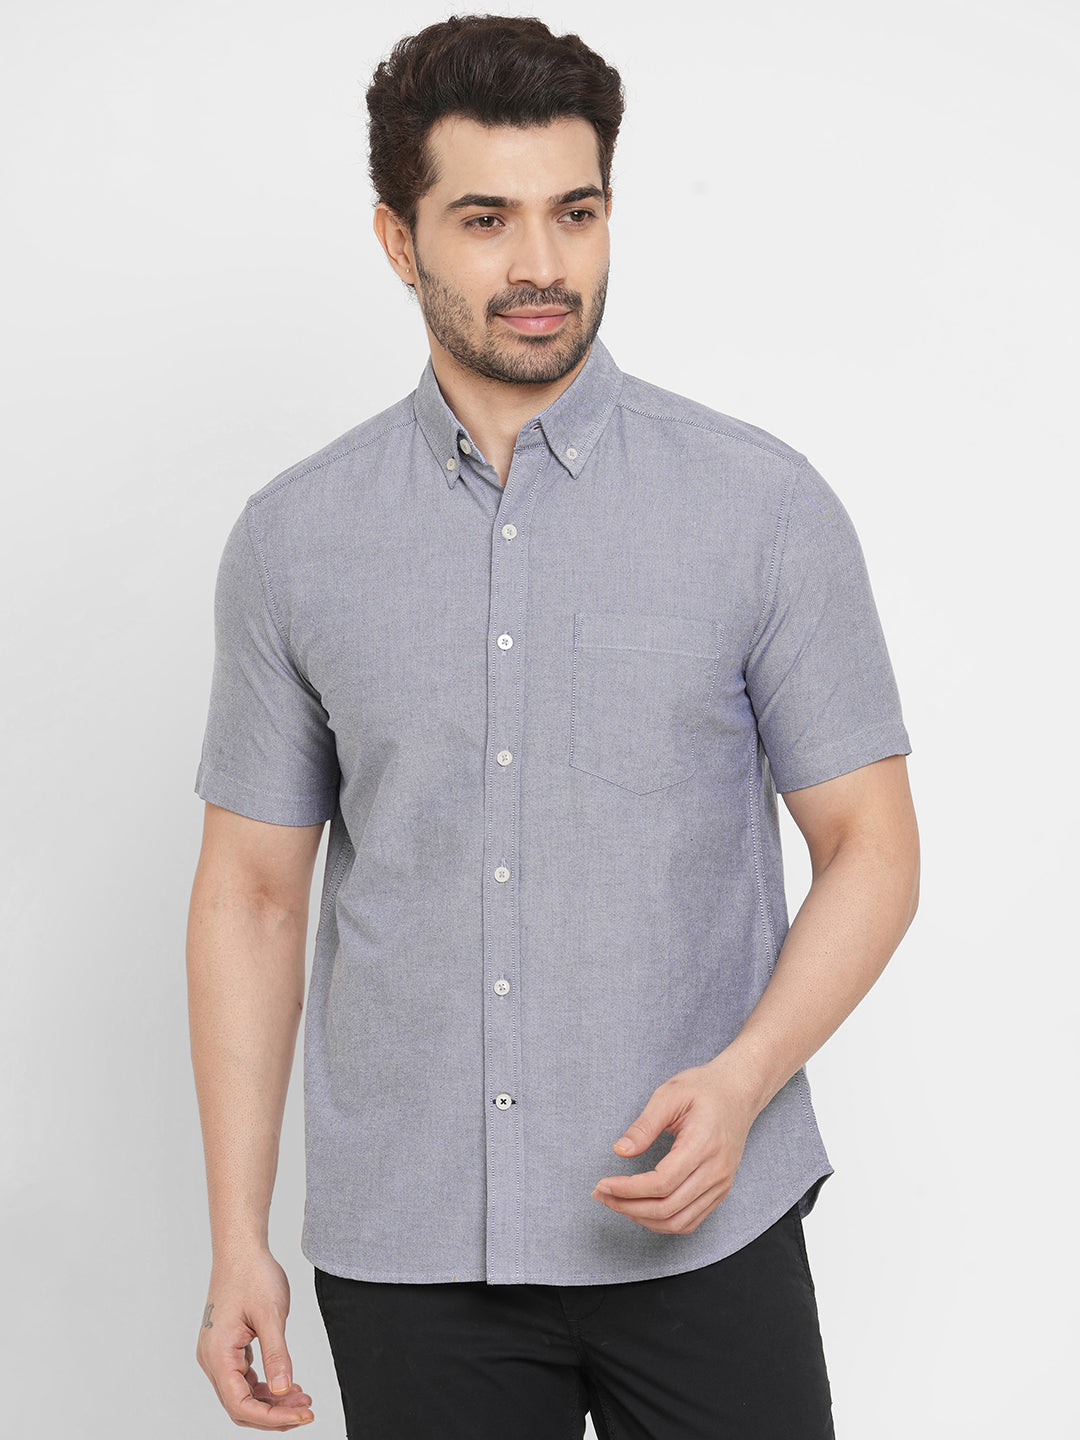 Men's Oxford Cotton Button Down Collar Short Sleeved Shirt - Grey